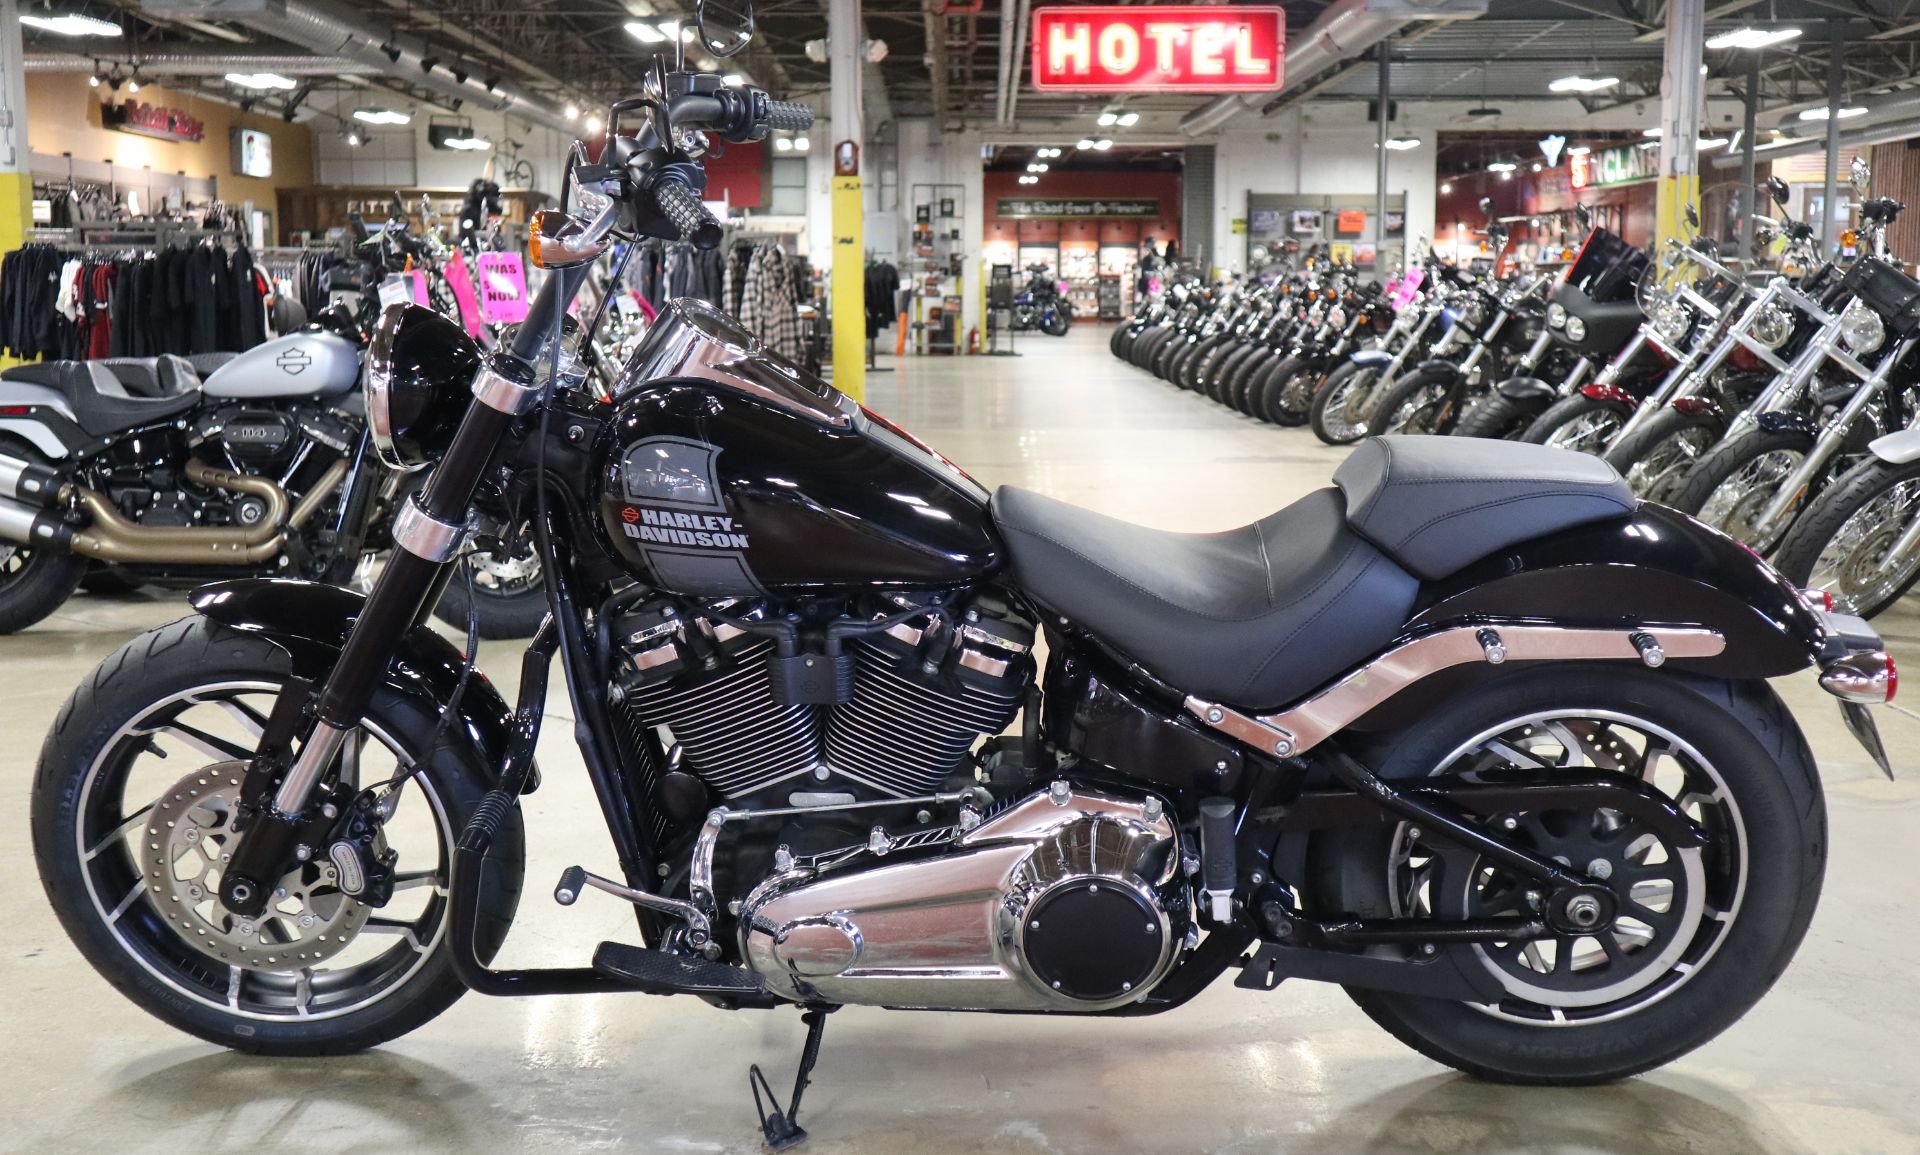 2021 Harley-Davidson Sport Glide® in New London, Connecticut - Photo 5